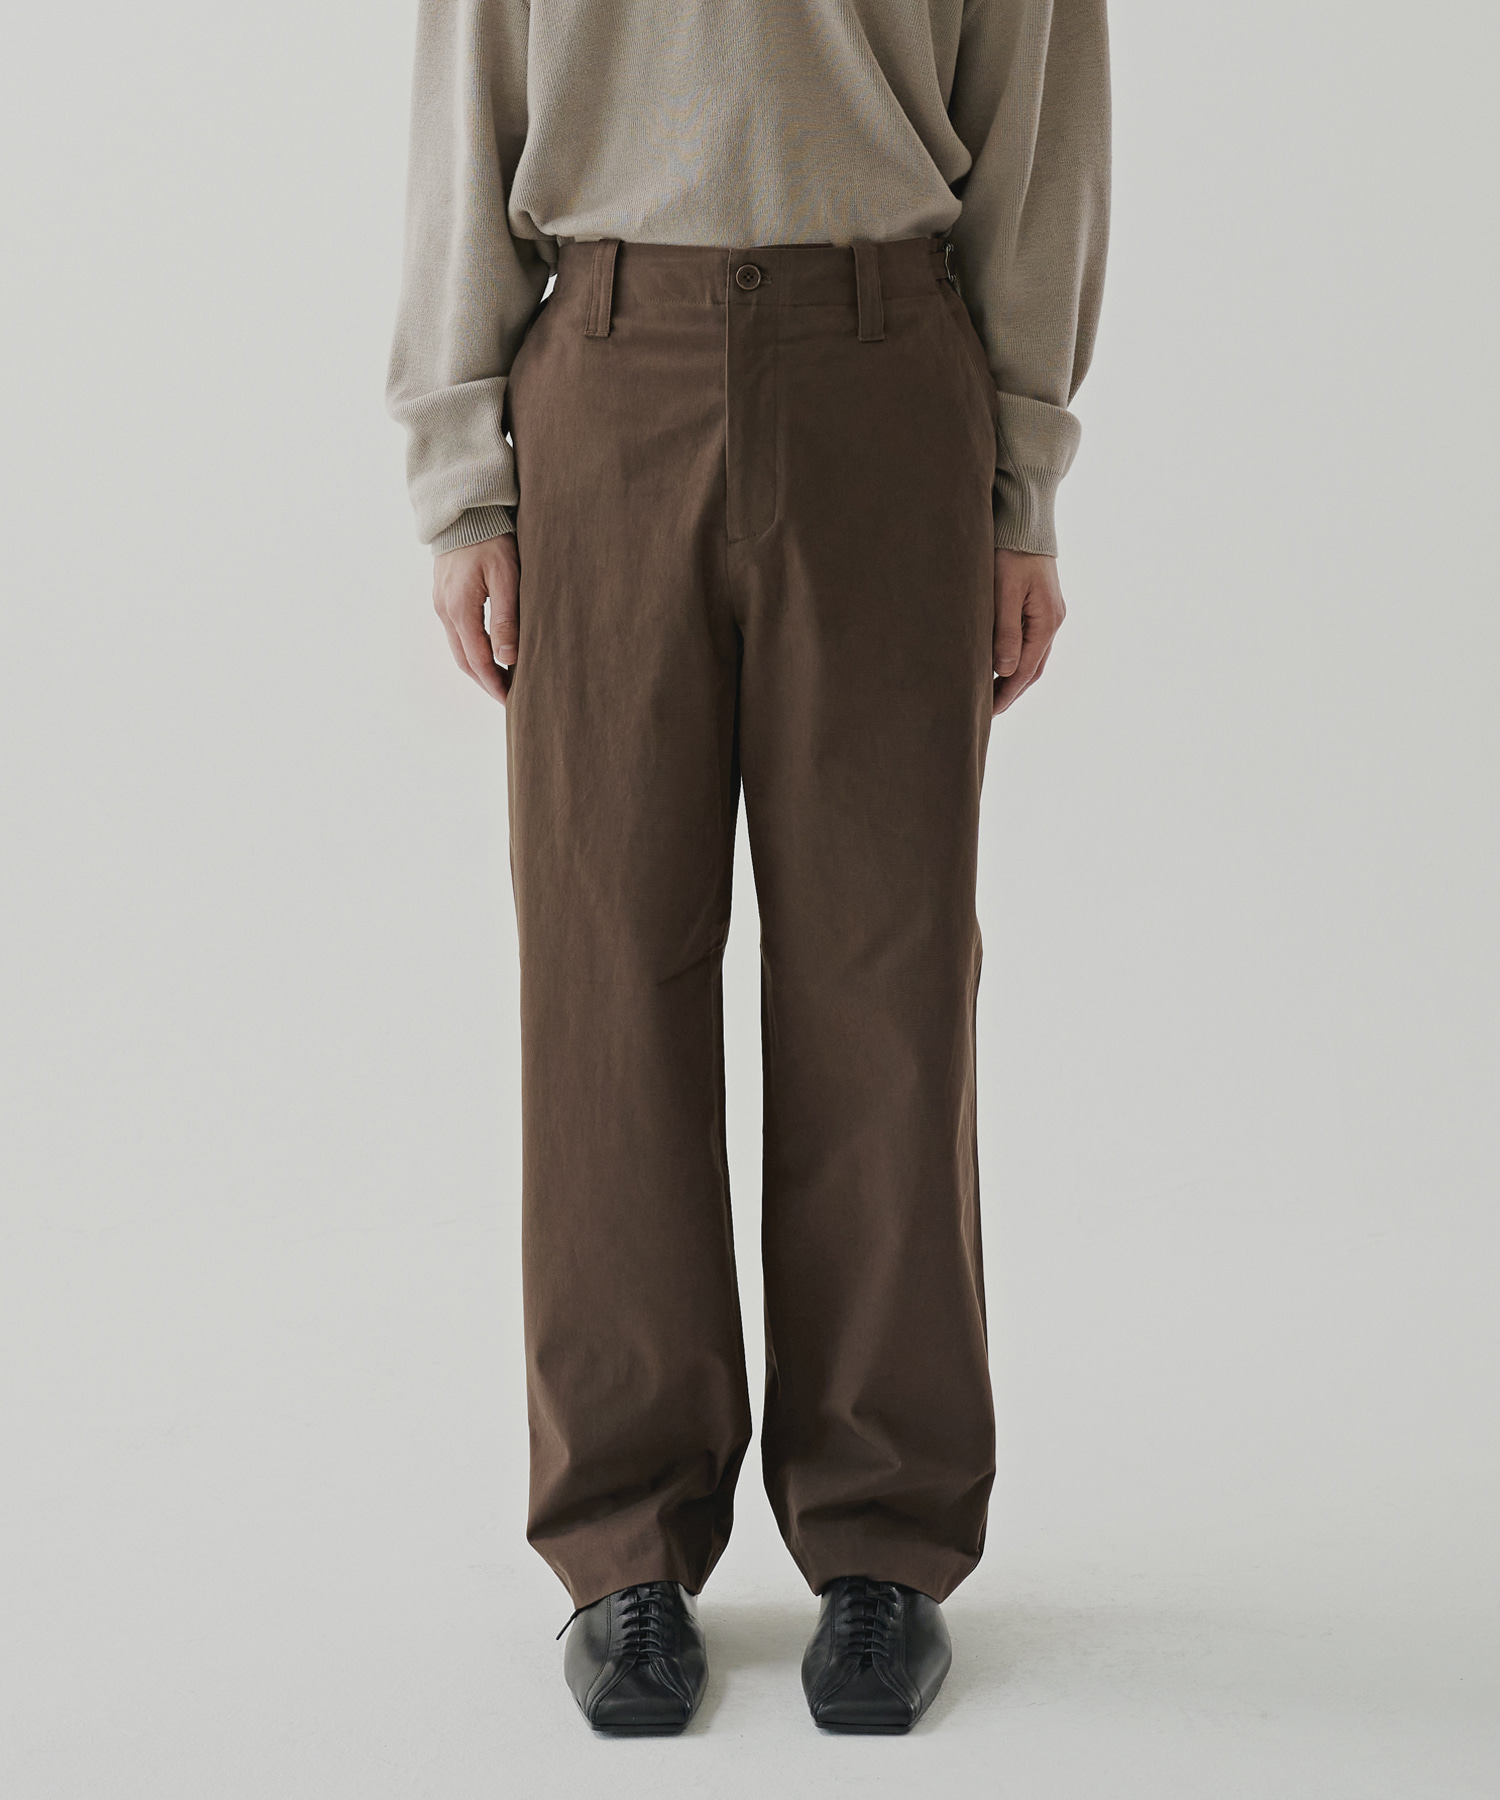 NOUN노운 straight chino pants (brown)